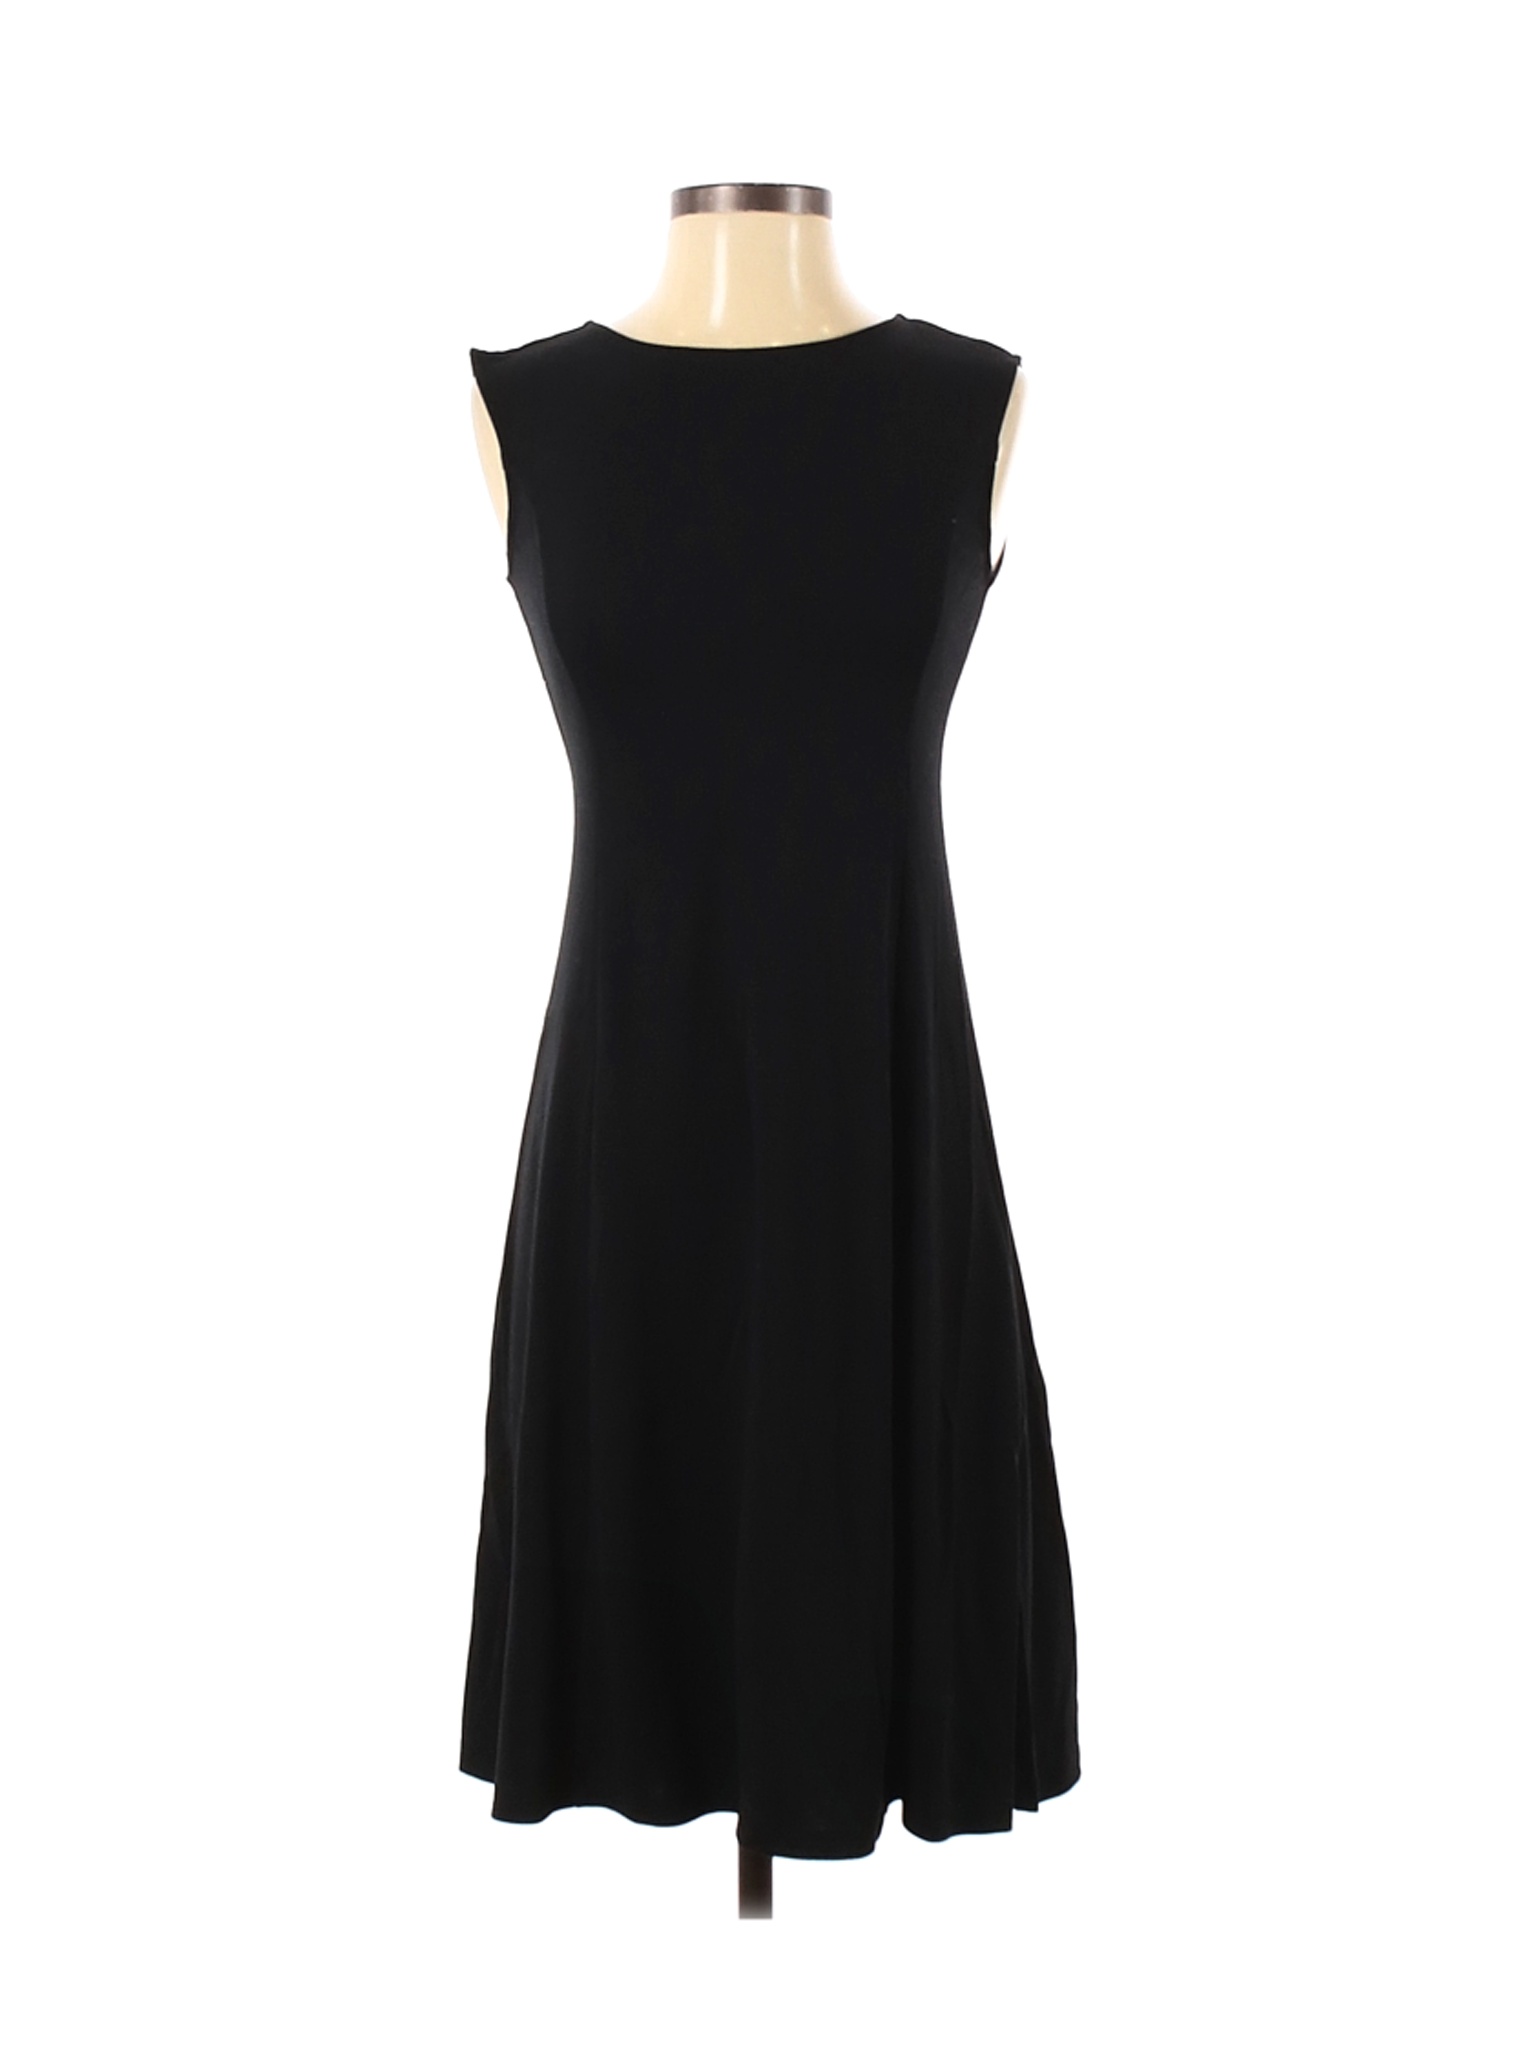 Uniqlo Women Black Casual Dress XS | eBay